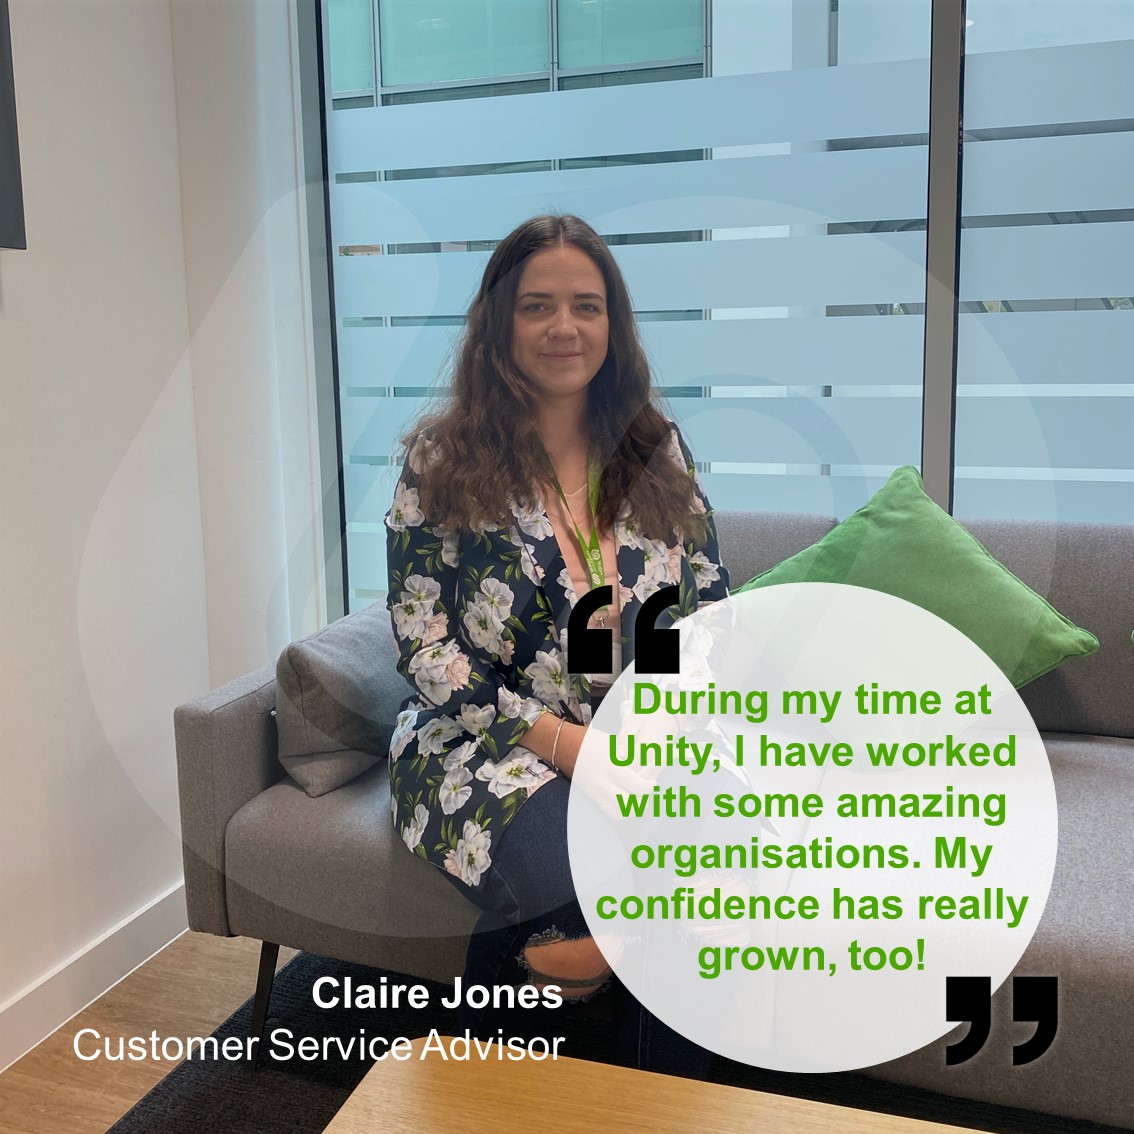 Claire Jones, Customer Service Advisor